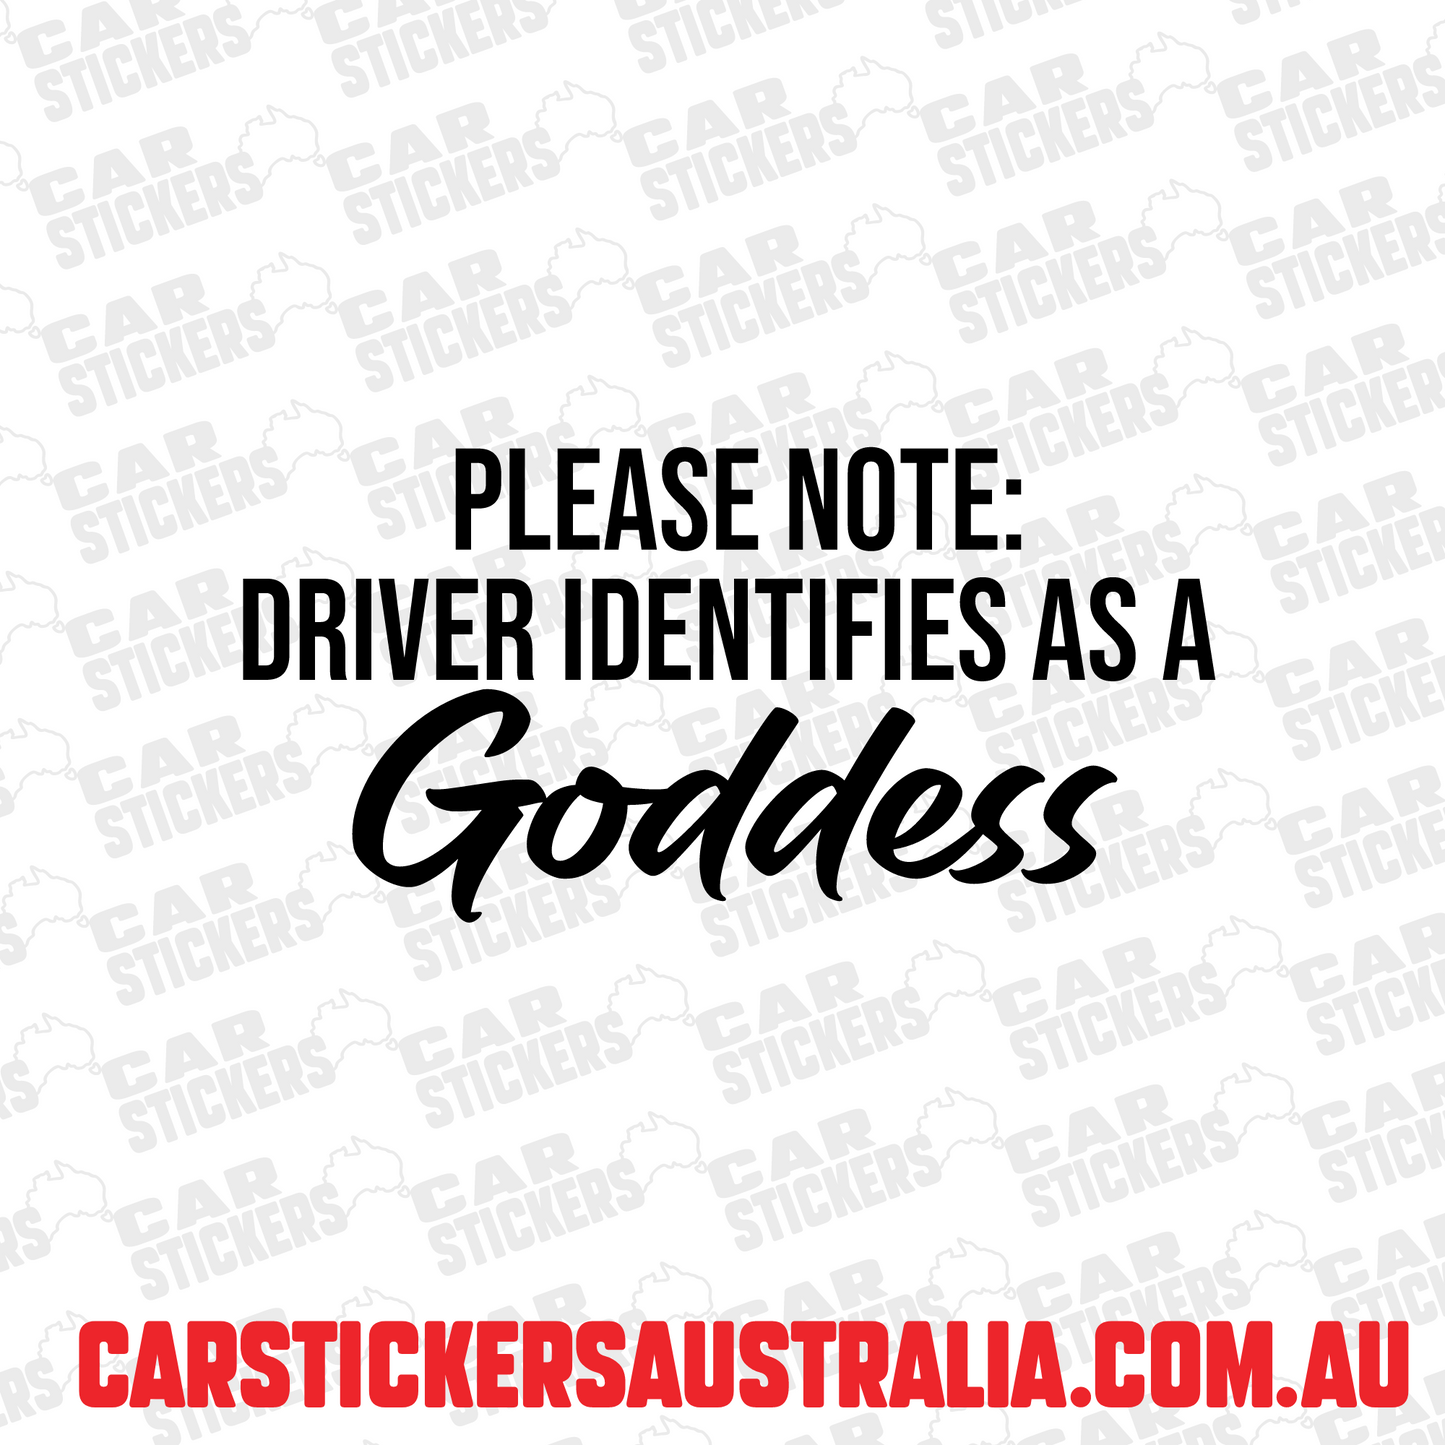 Driver Identifies as a Goddess